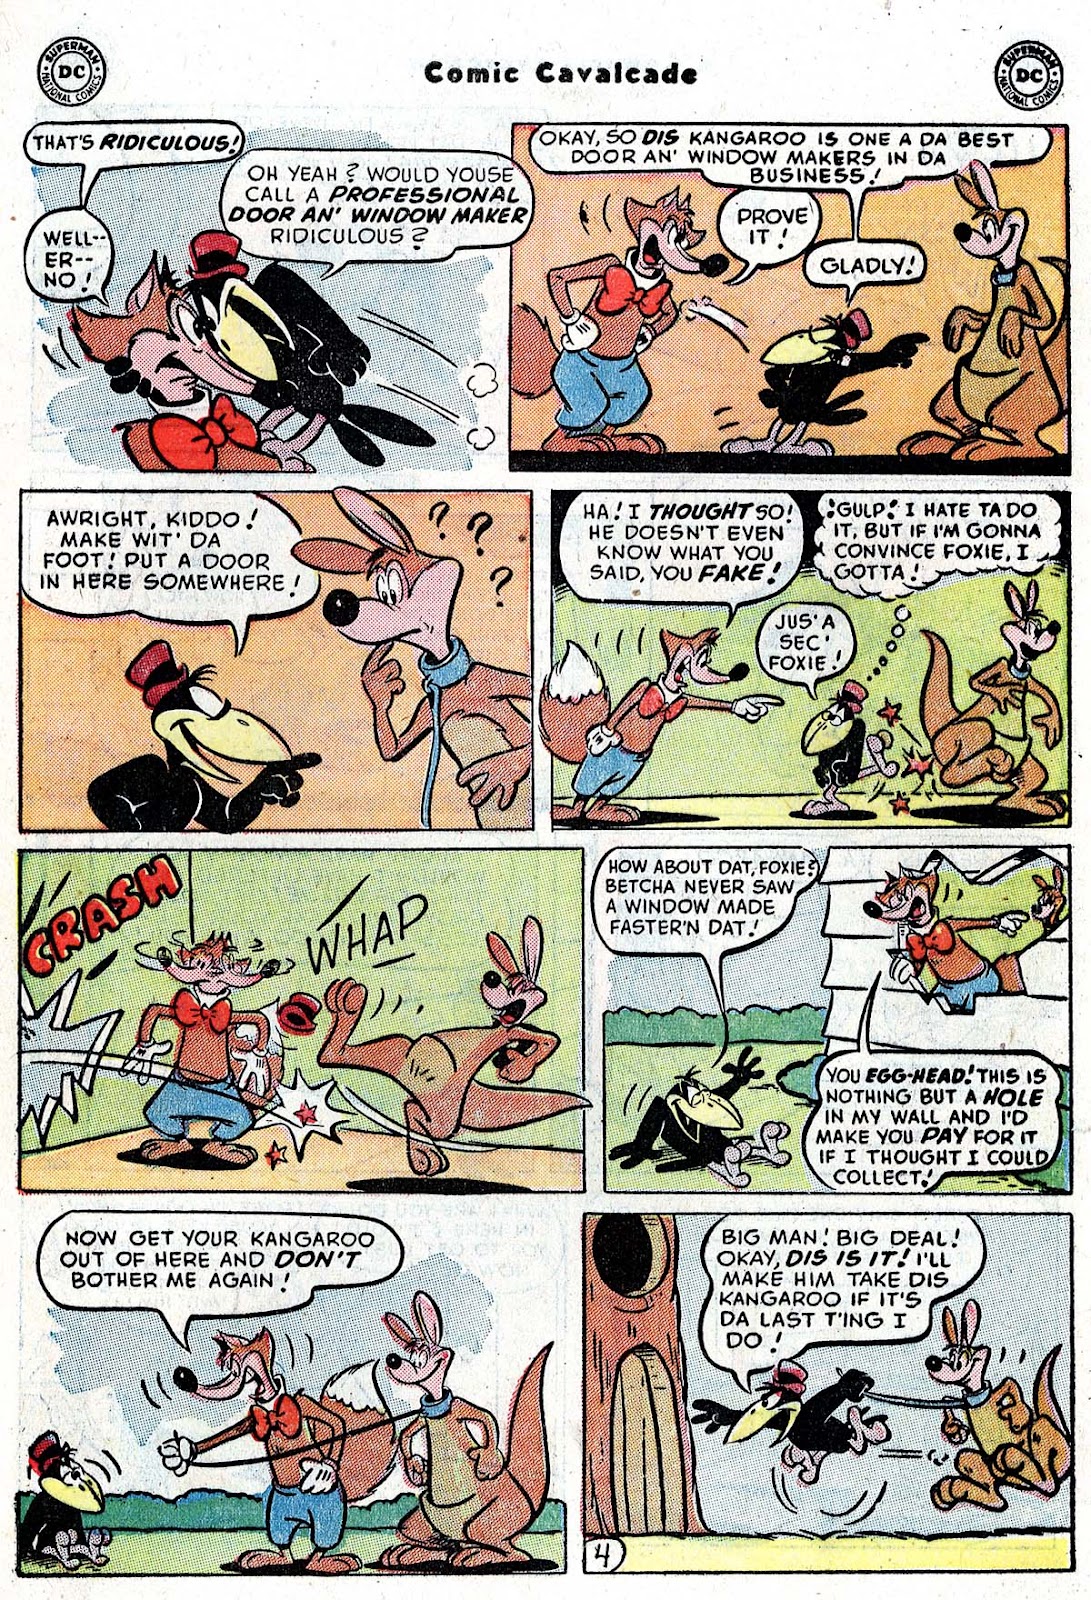 Comic Cavalcade issue 58 - Page 6